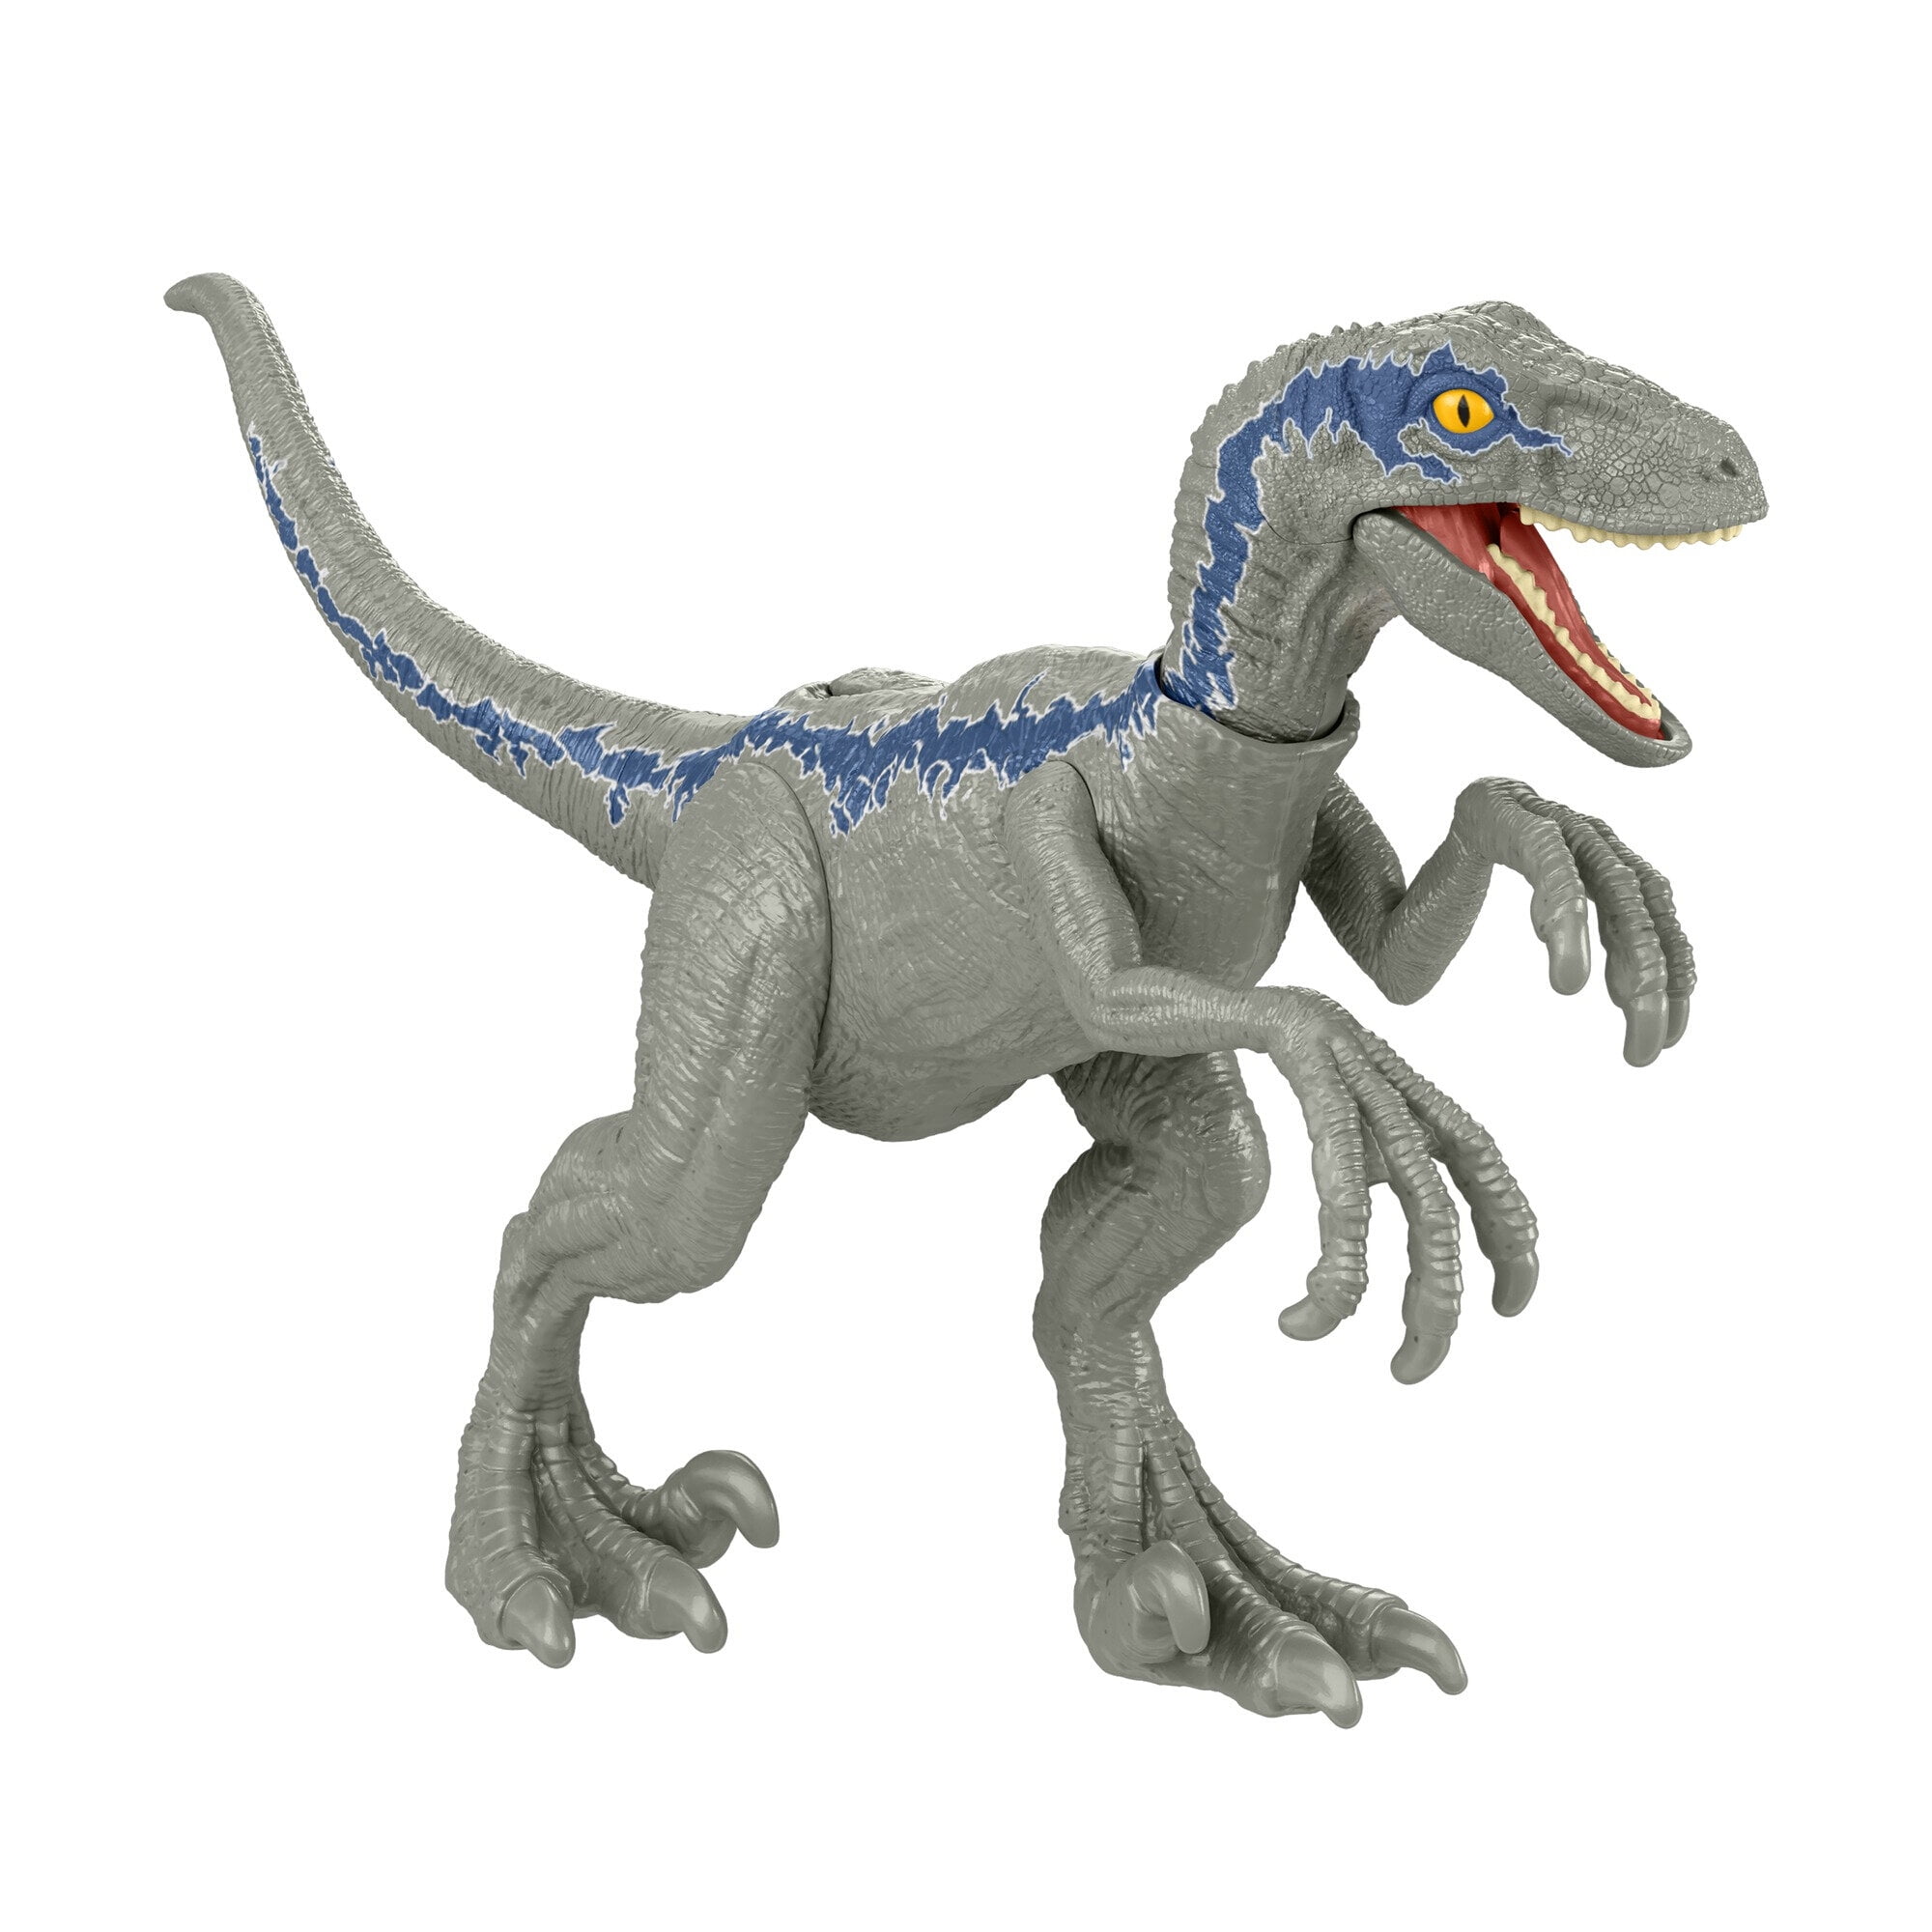 Details about   Therizinosaurus Jurassic World Park Dinosaur Toy Model Body Set 